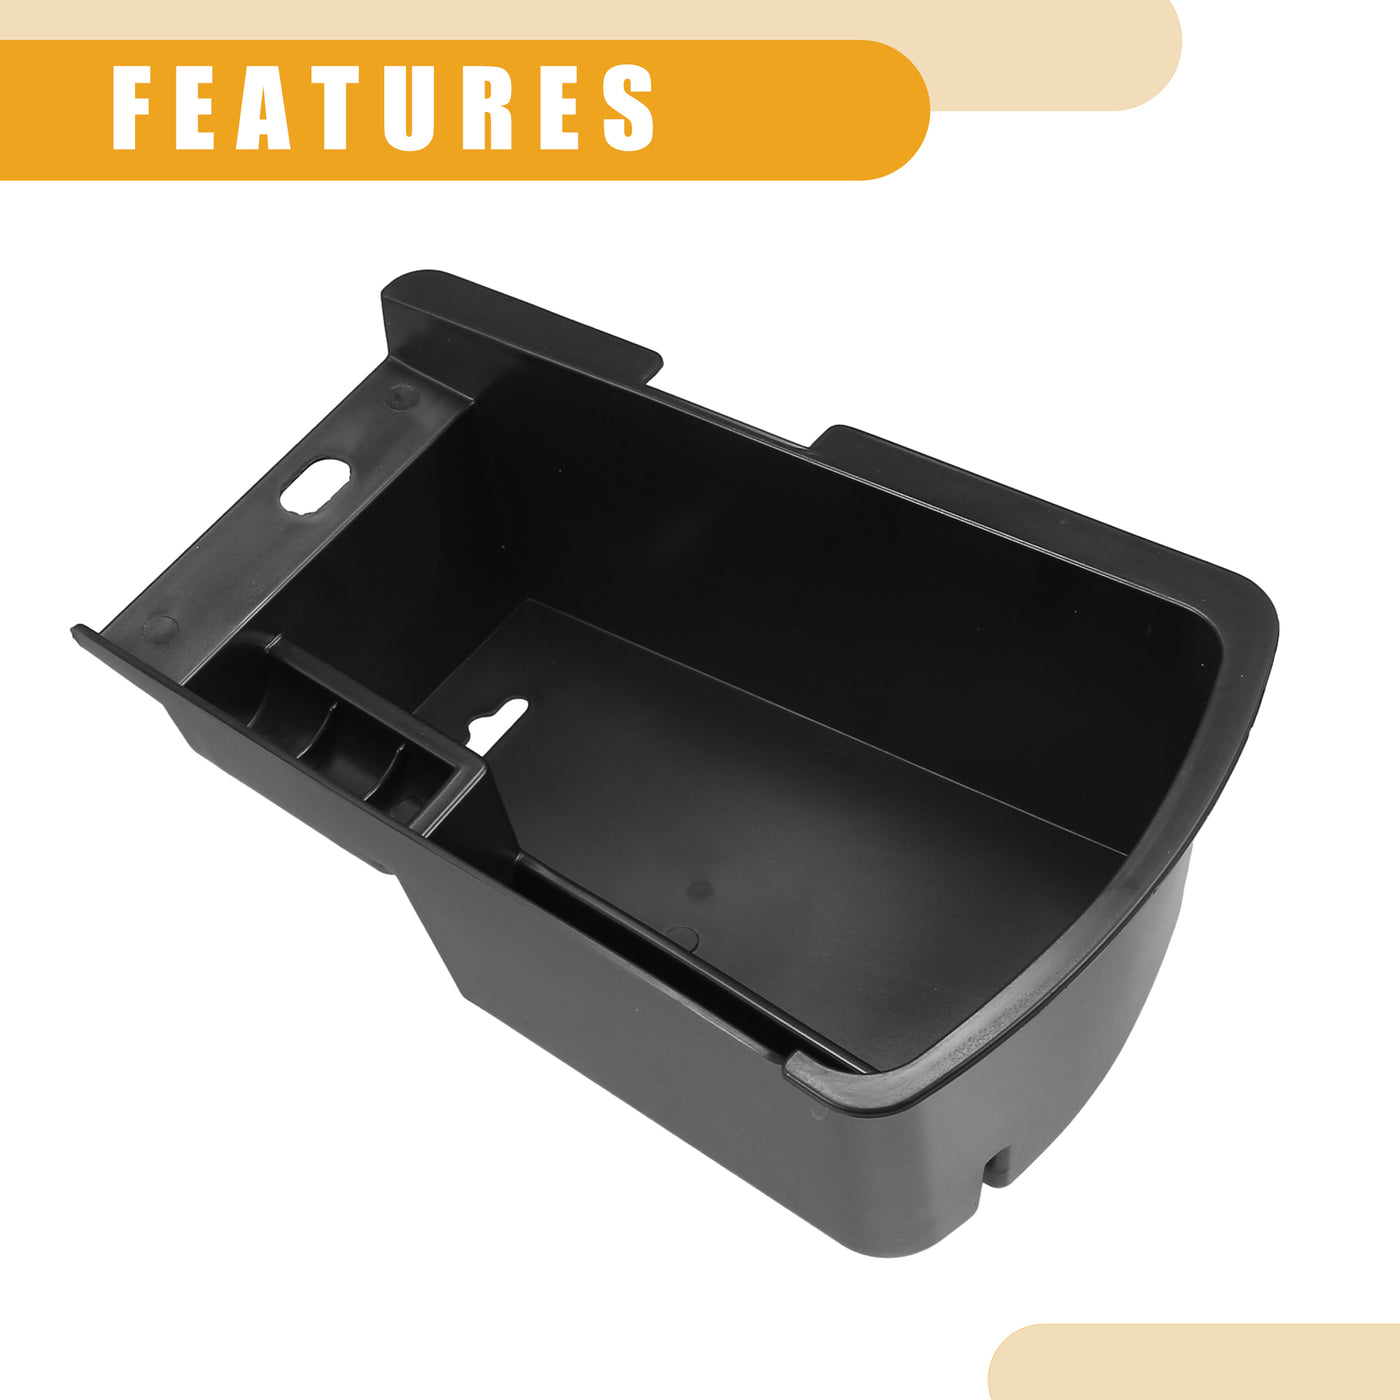 Partuto Center Console Organizer Tray - Car Front Armrest Storage Box - for Peugeot 3008 2017-2020 Plastic Black - 1 Pc